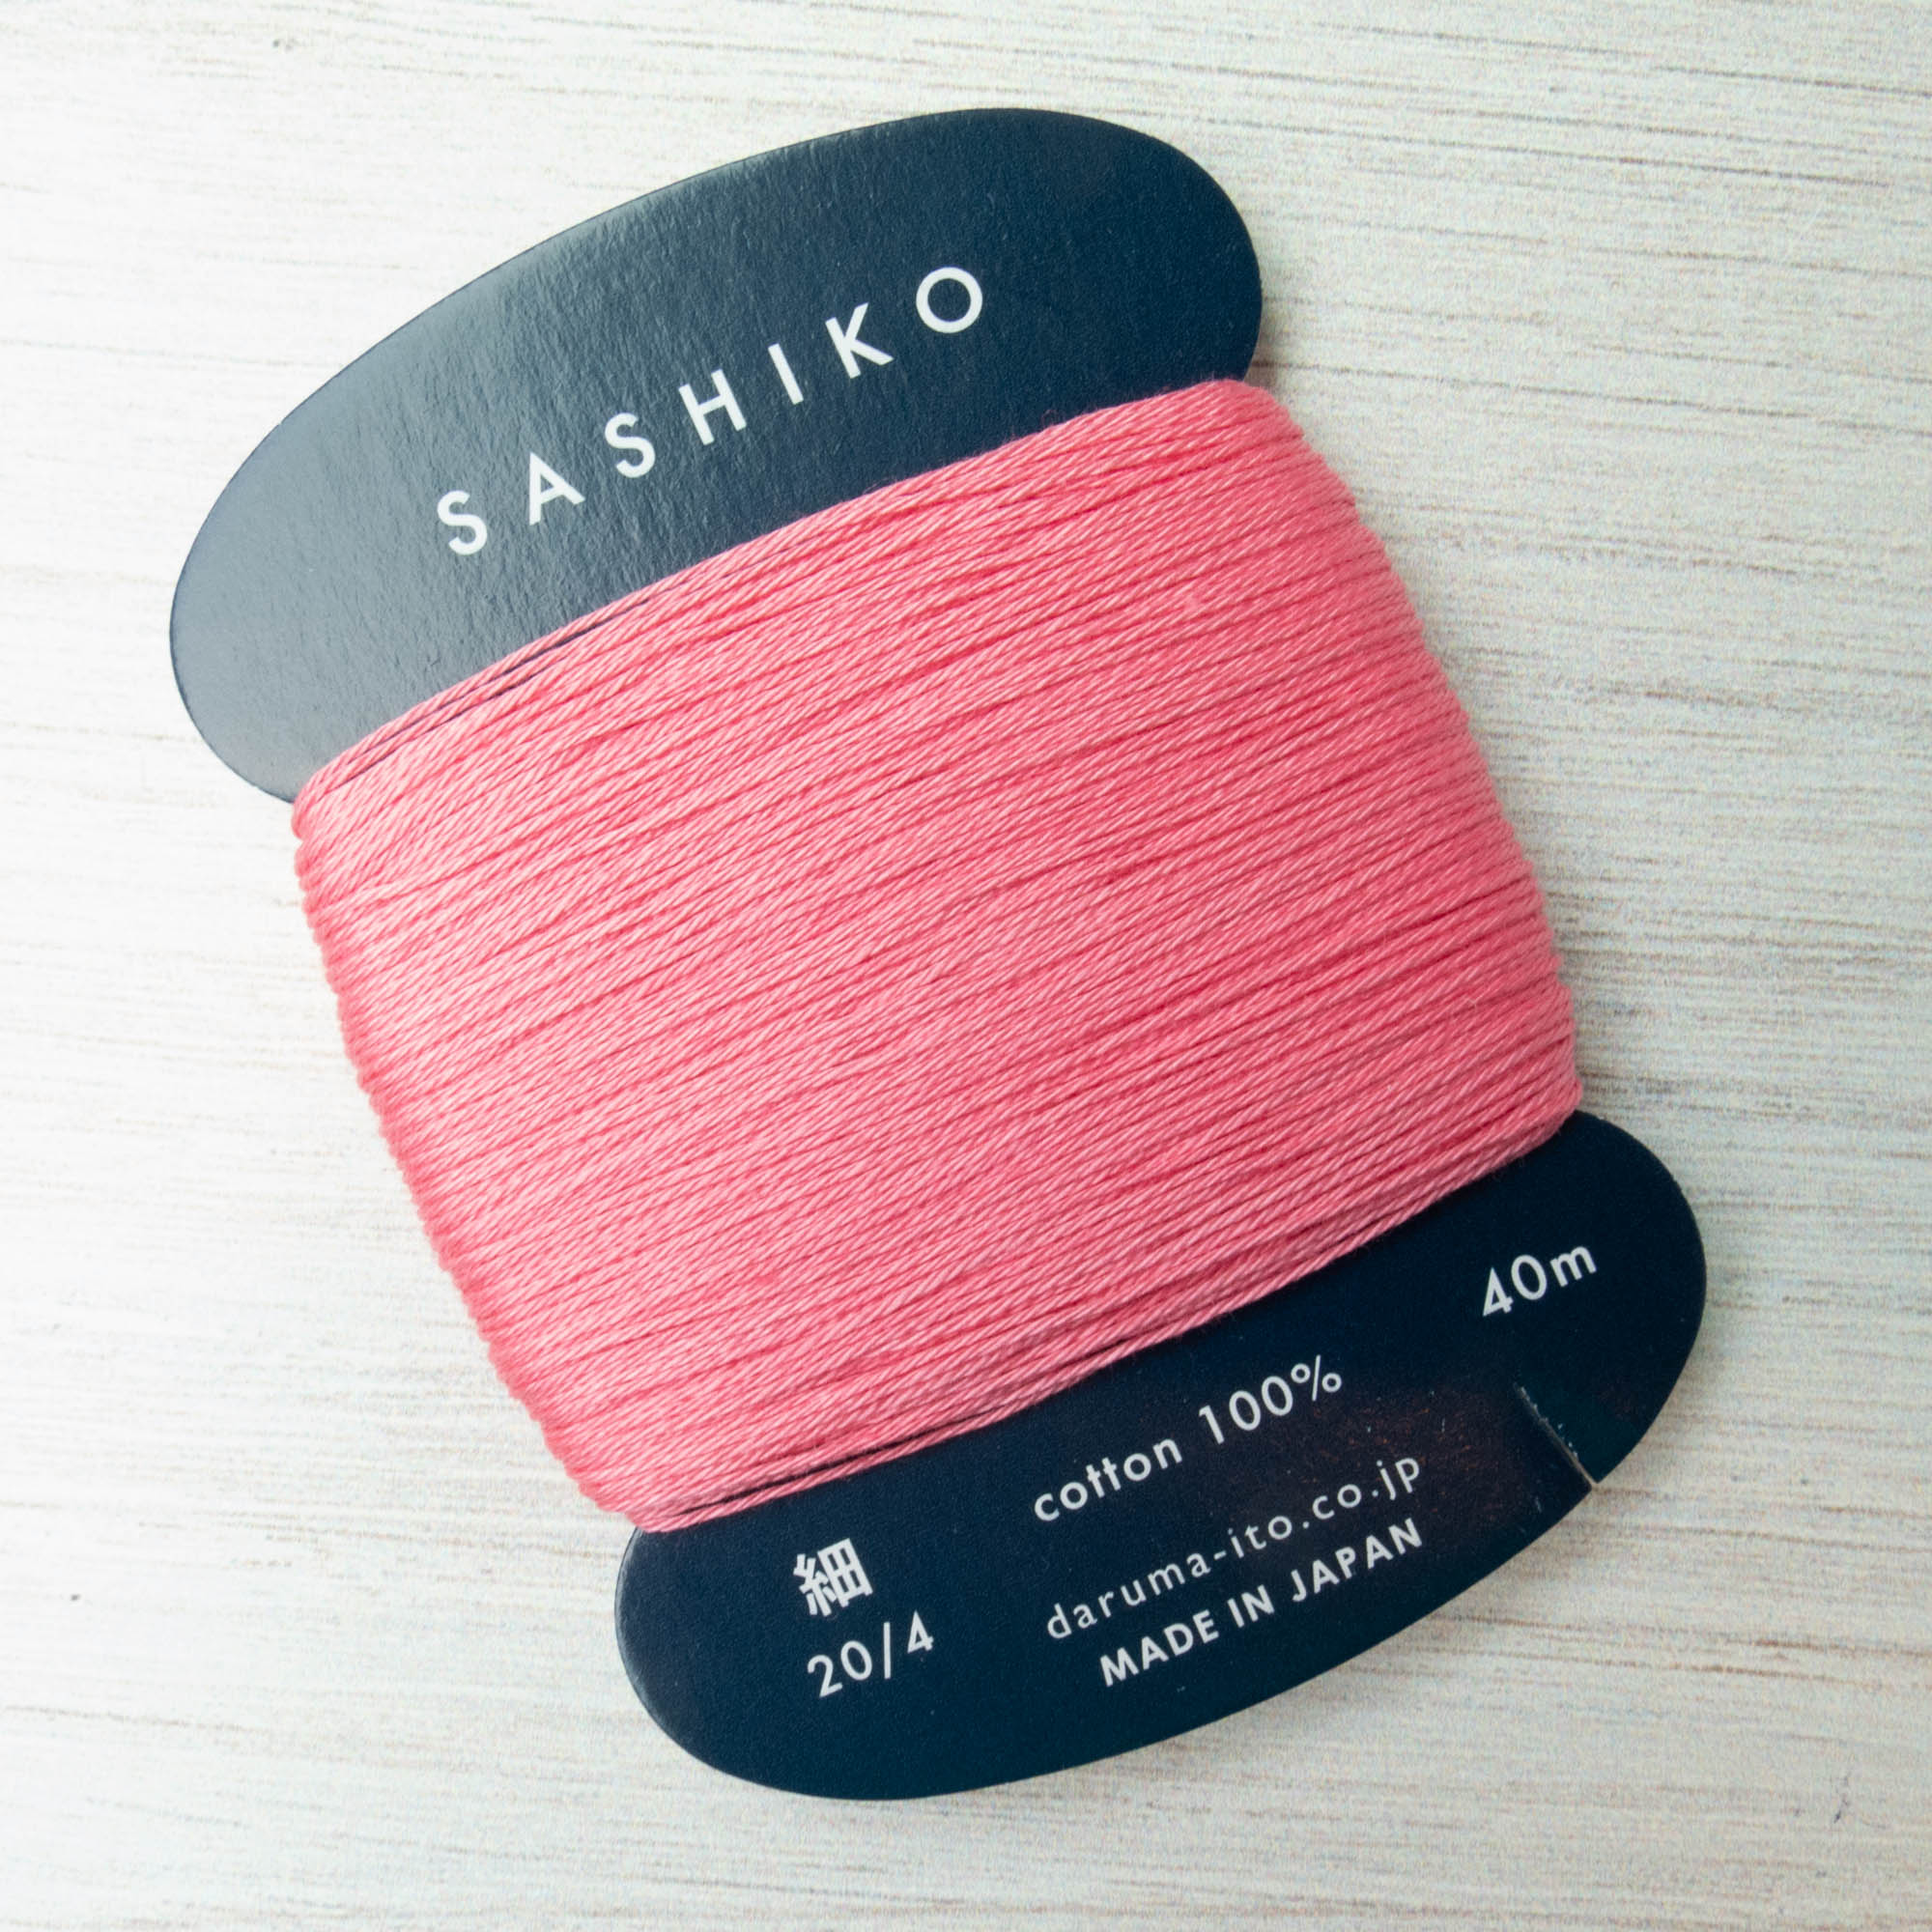 ORIM - Daruma - Sashiko Cotton Thread 20/4 - 0222 - Plum